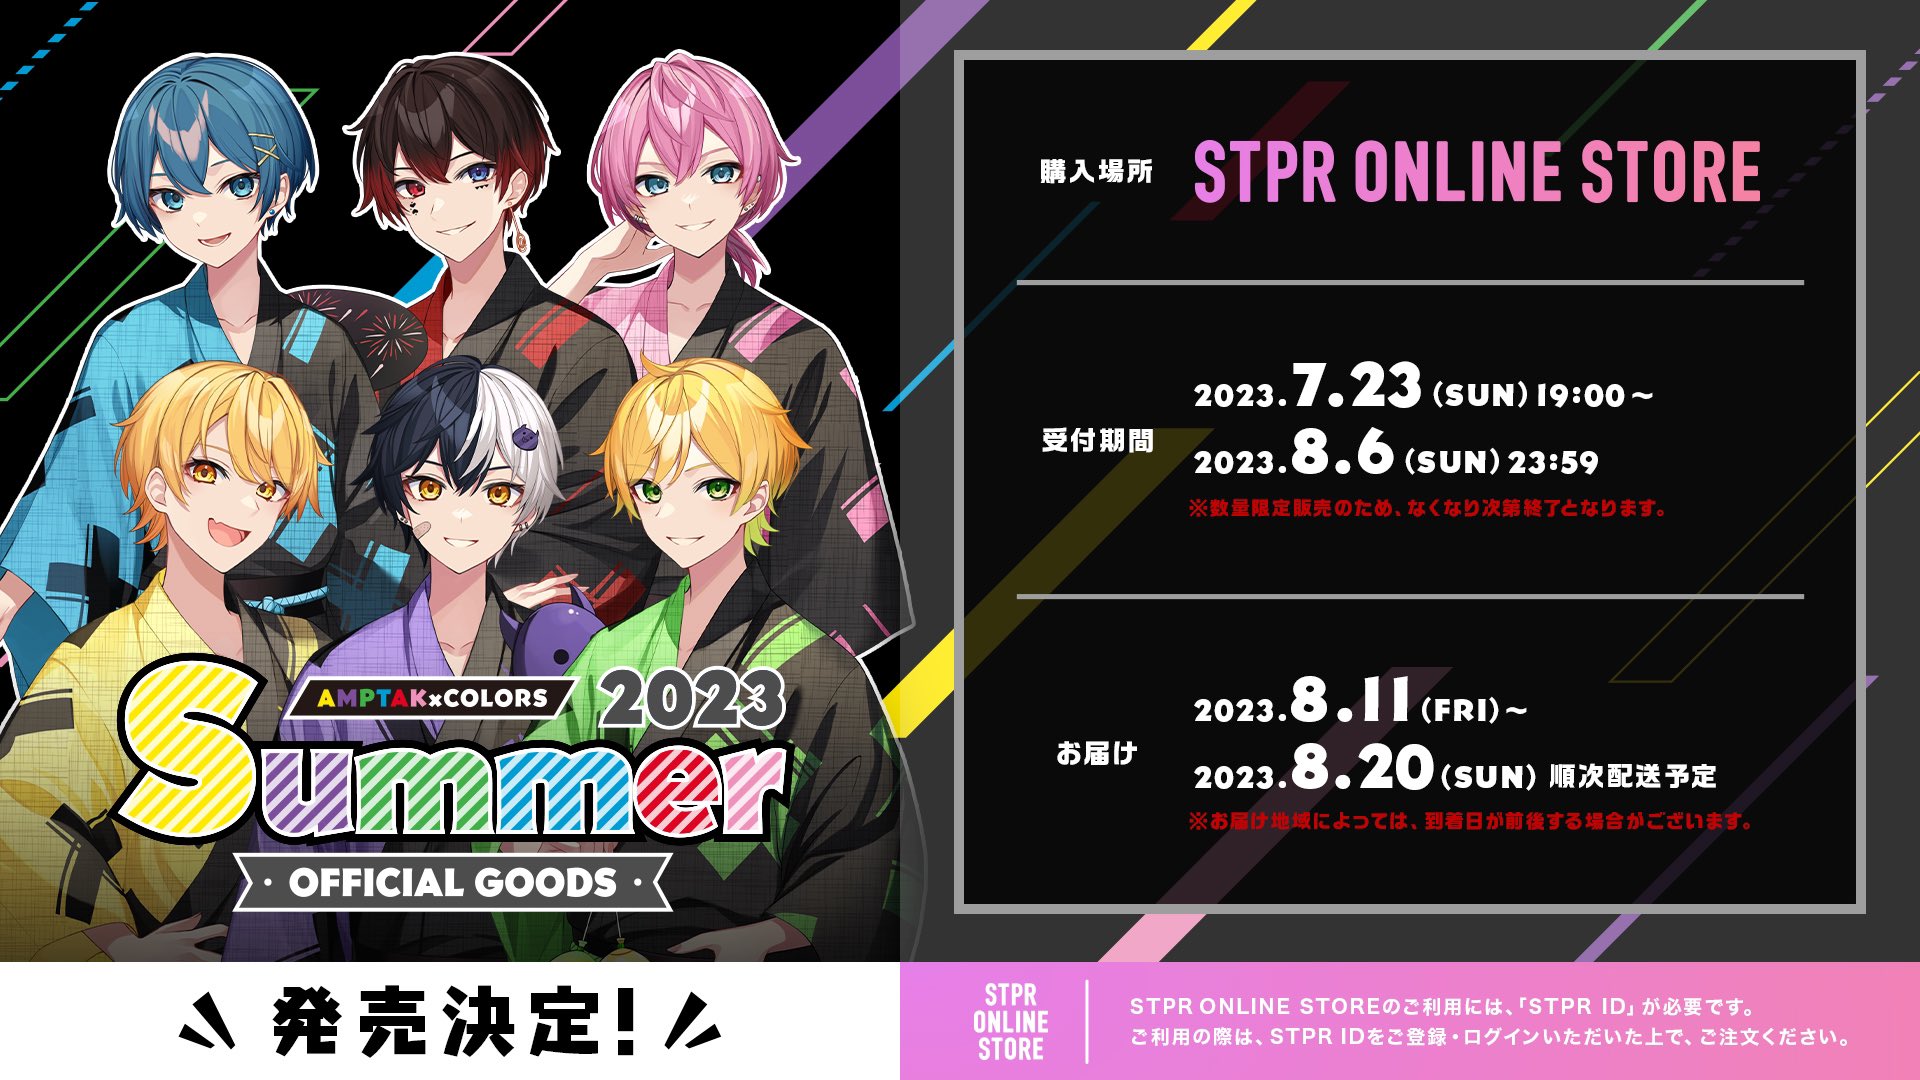 STPR ONLINE STORE【公式】 on X: 